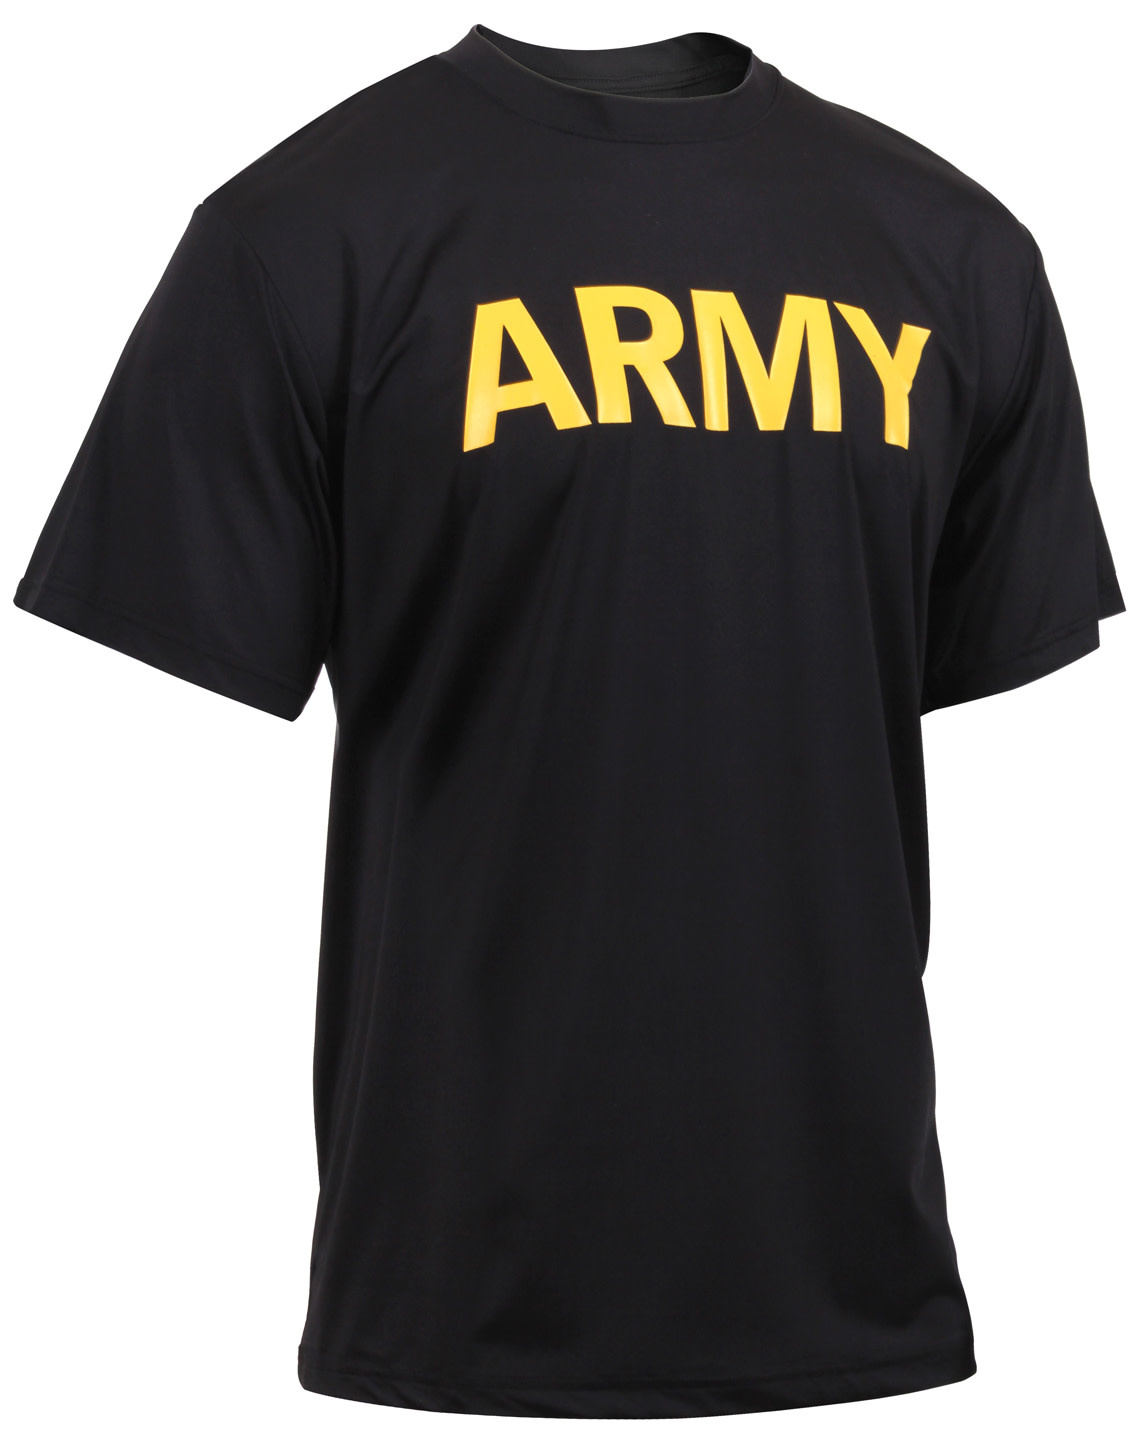 Rothco Army PT Shirt - Black/Yellow